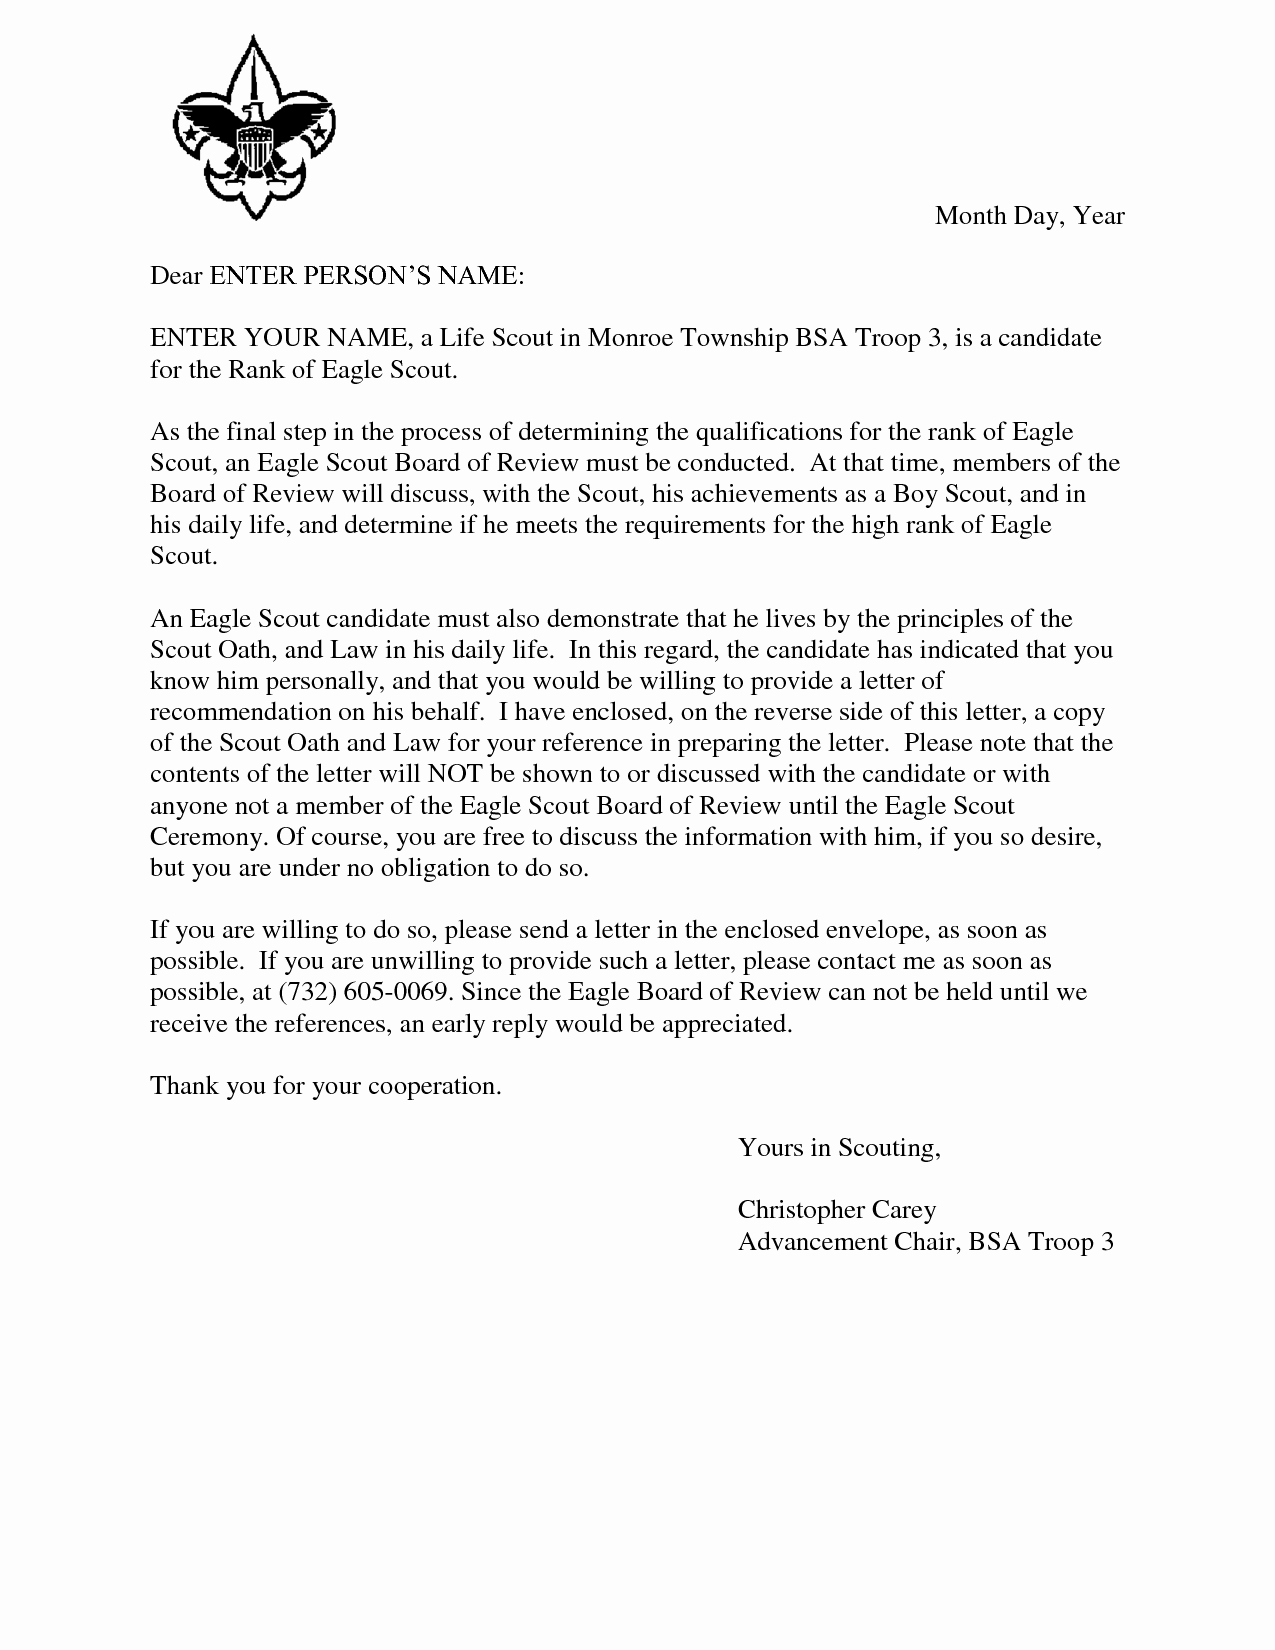 Eagle Scout Recommendation Letter Unique Eagle Scout Reference Request Sample Letter Doc 7 by